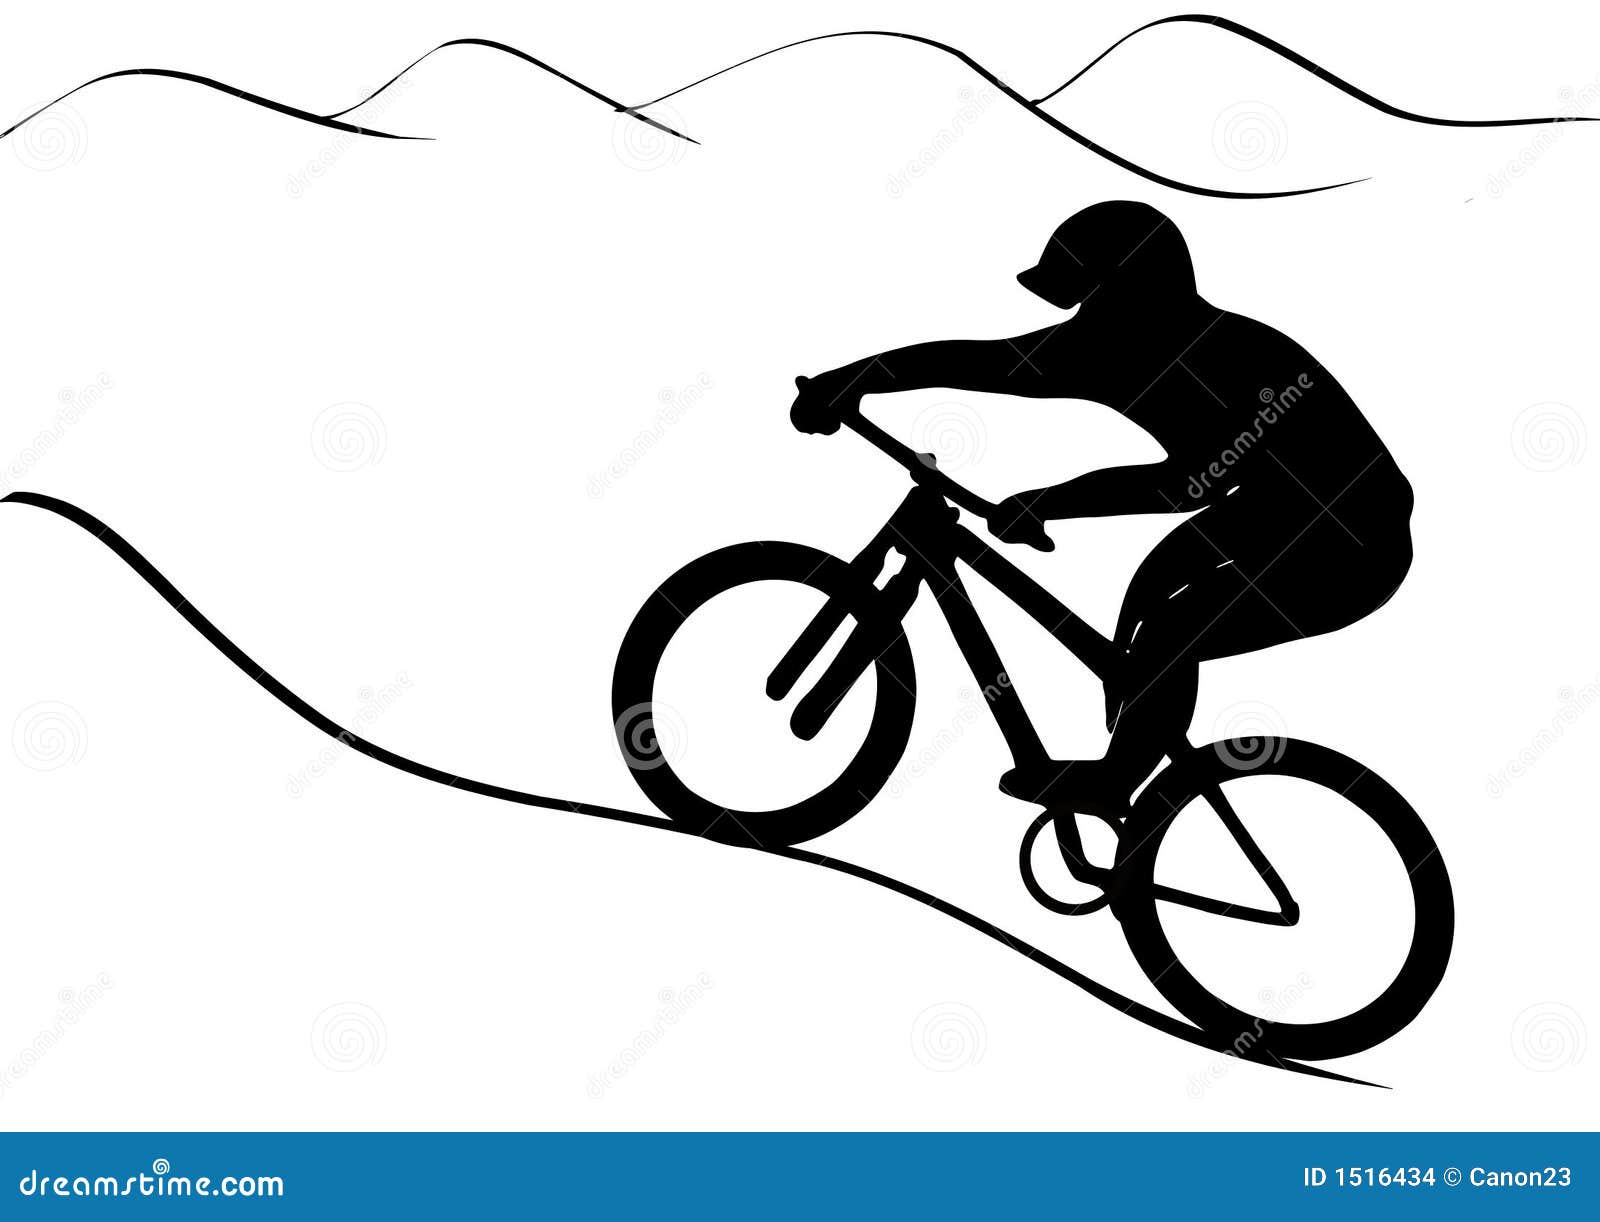 mountain bike clip art images - photo #29